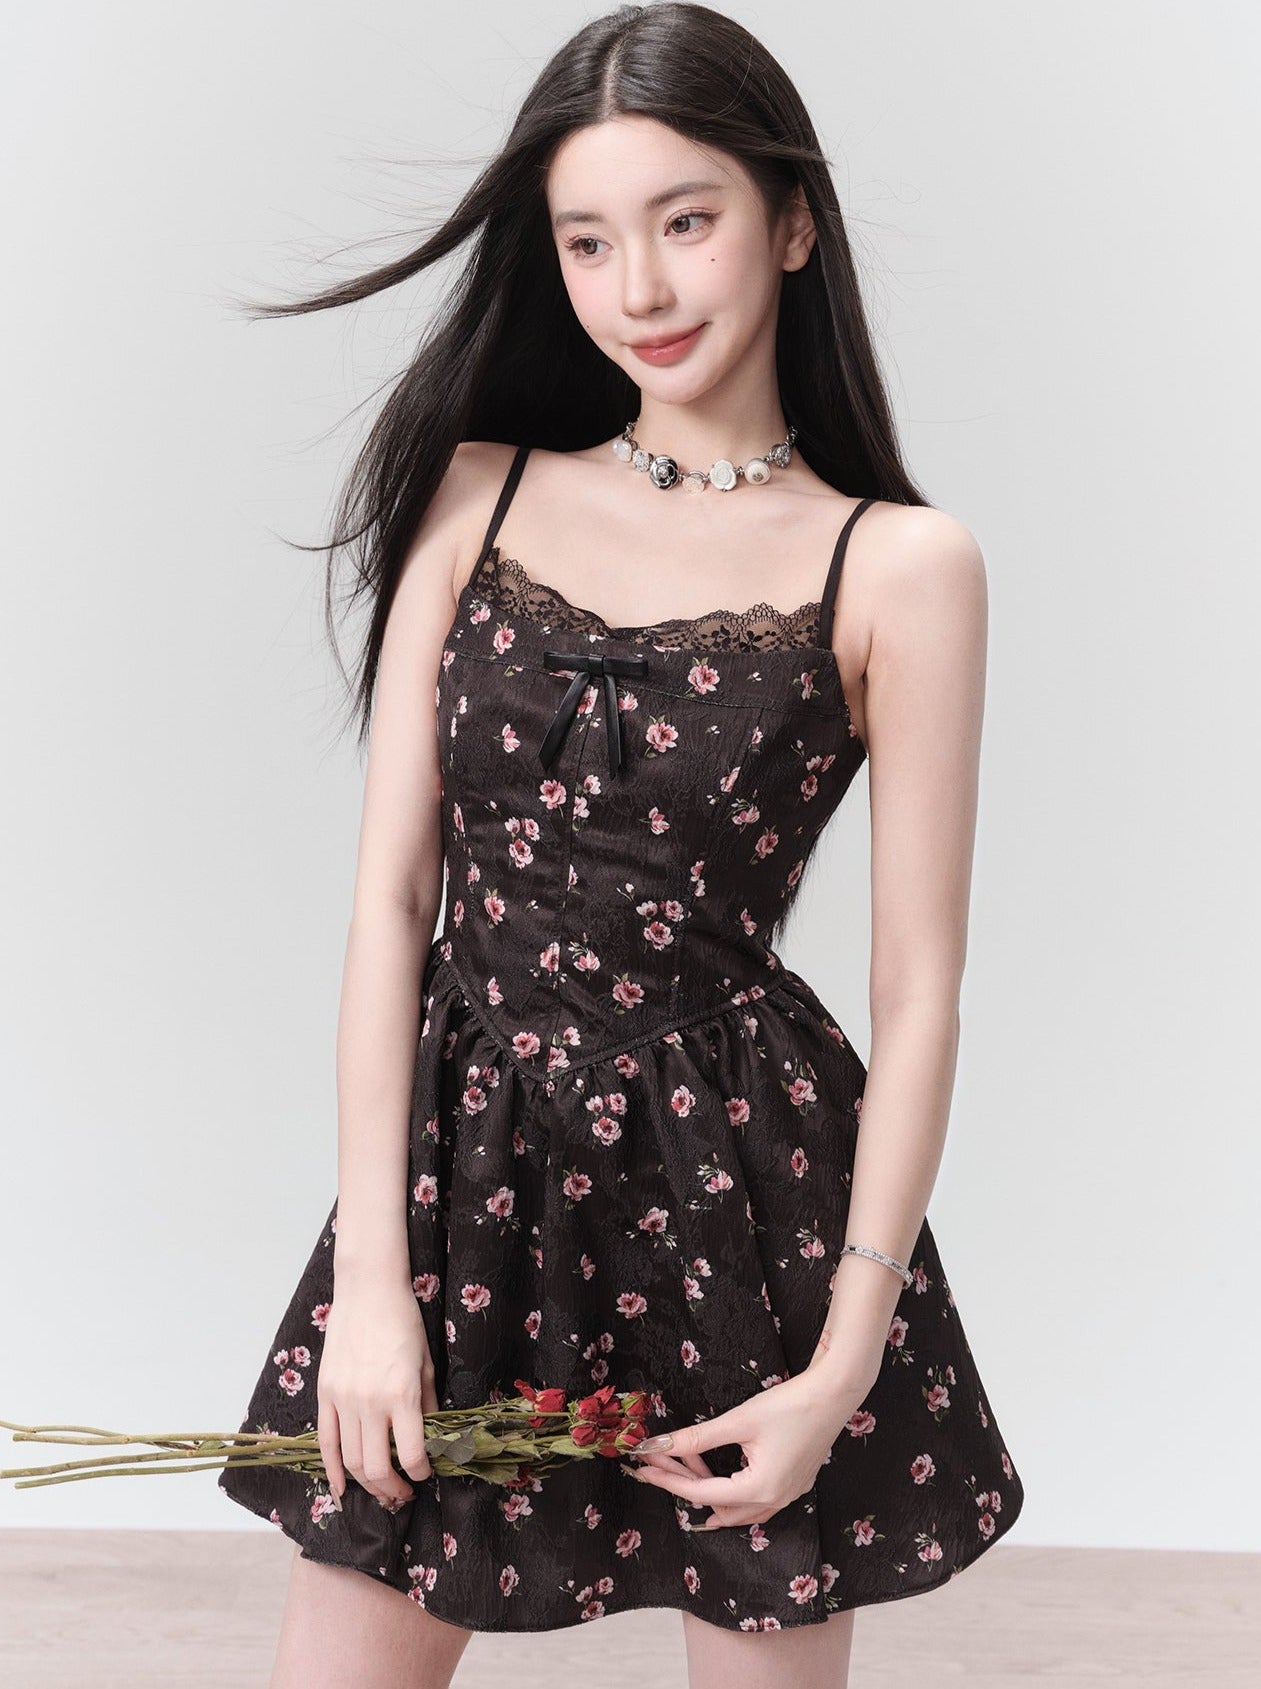 [Spot] Fragile Shop Falling Rose Garden Delicate Floral Slip Dress Temperament Romantic Date Dress